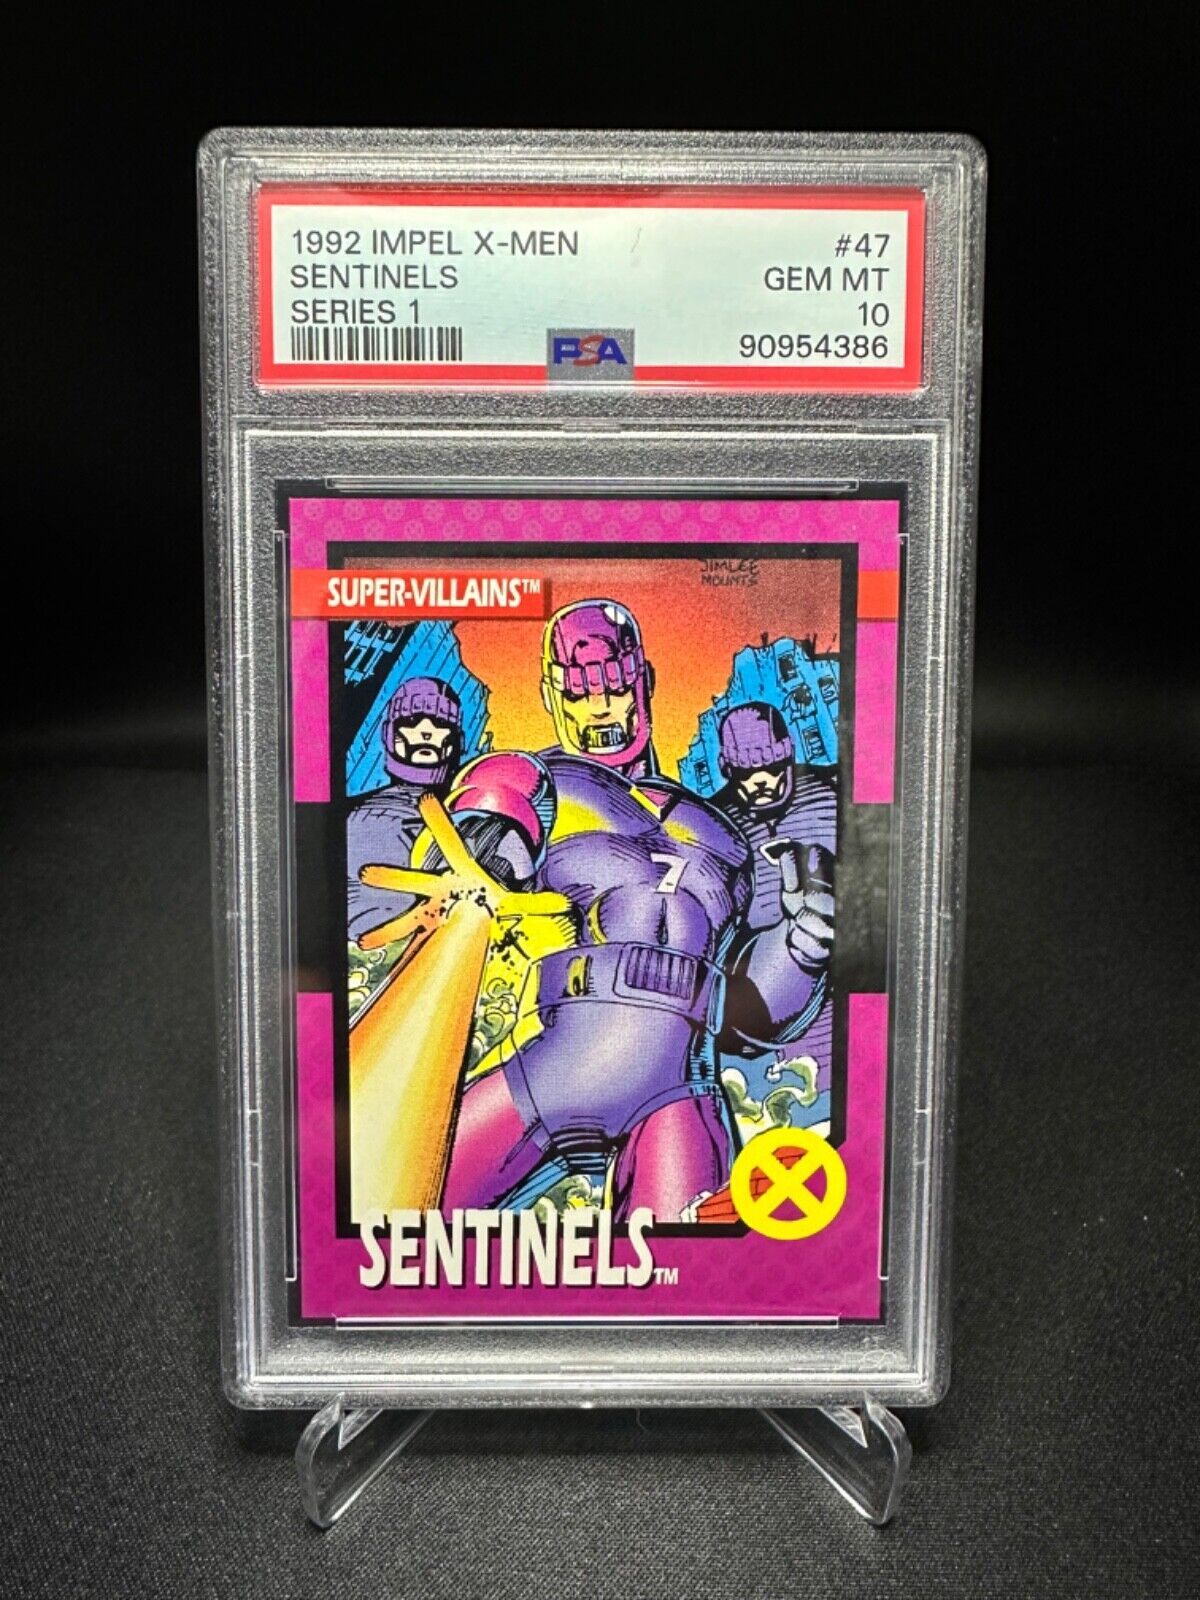 1992 Impel X-Men Series 1 - Sentinels - PSA 10 - #47 - Population 12